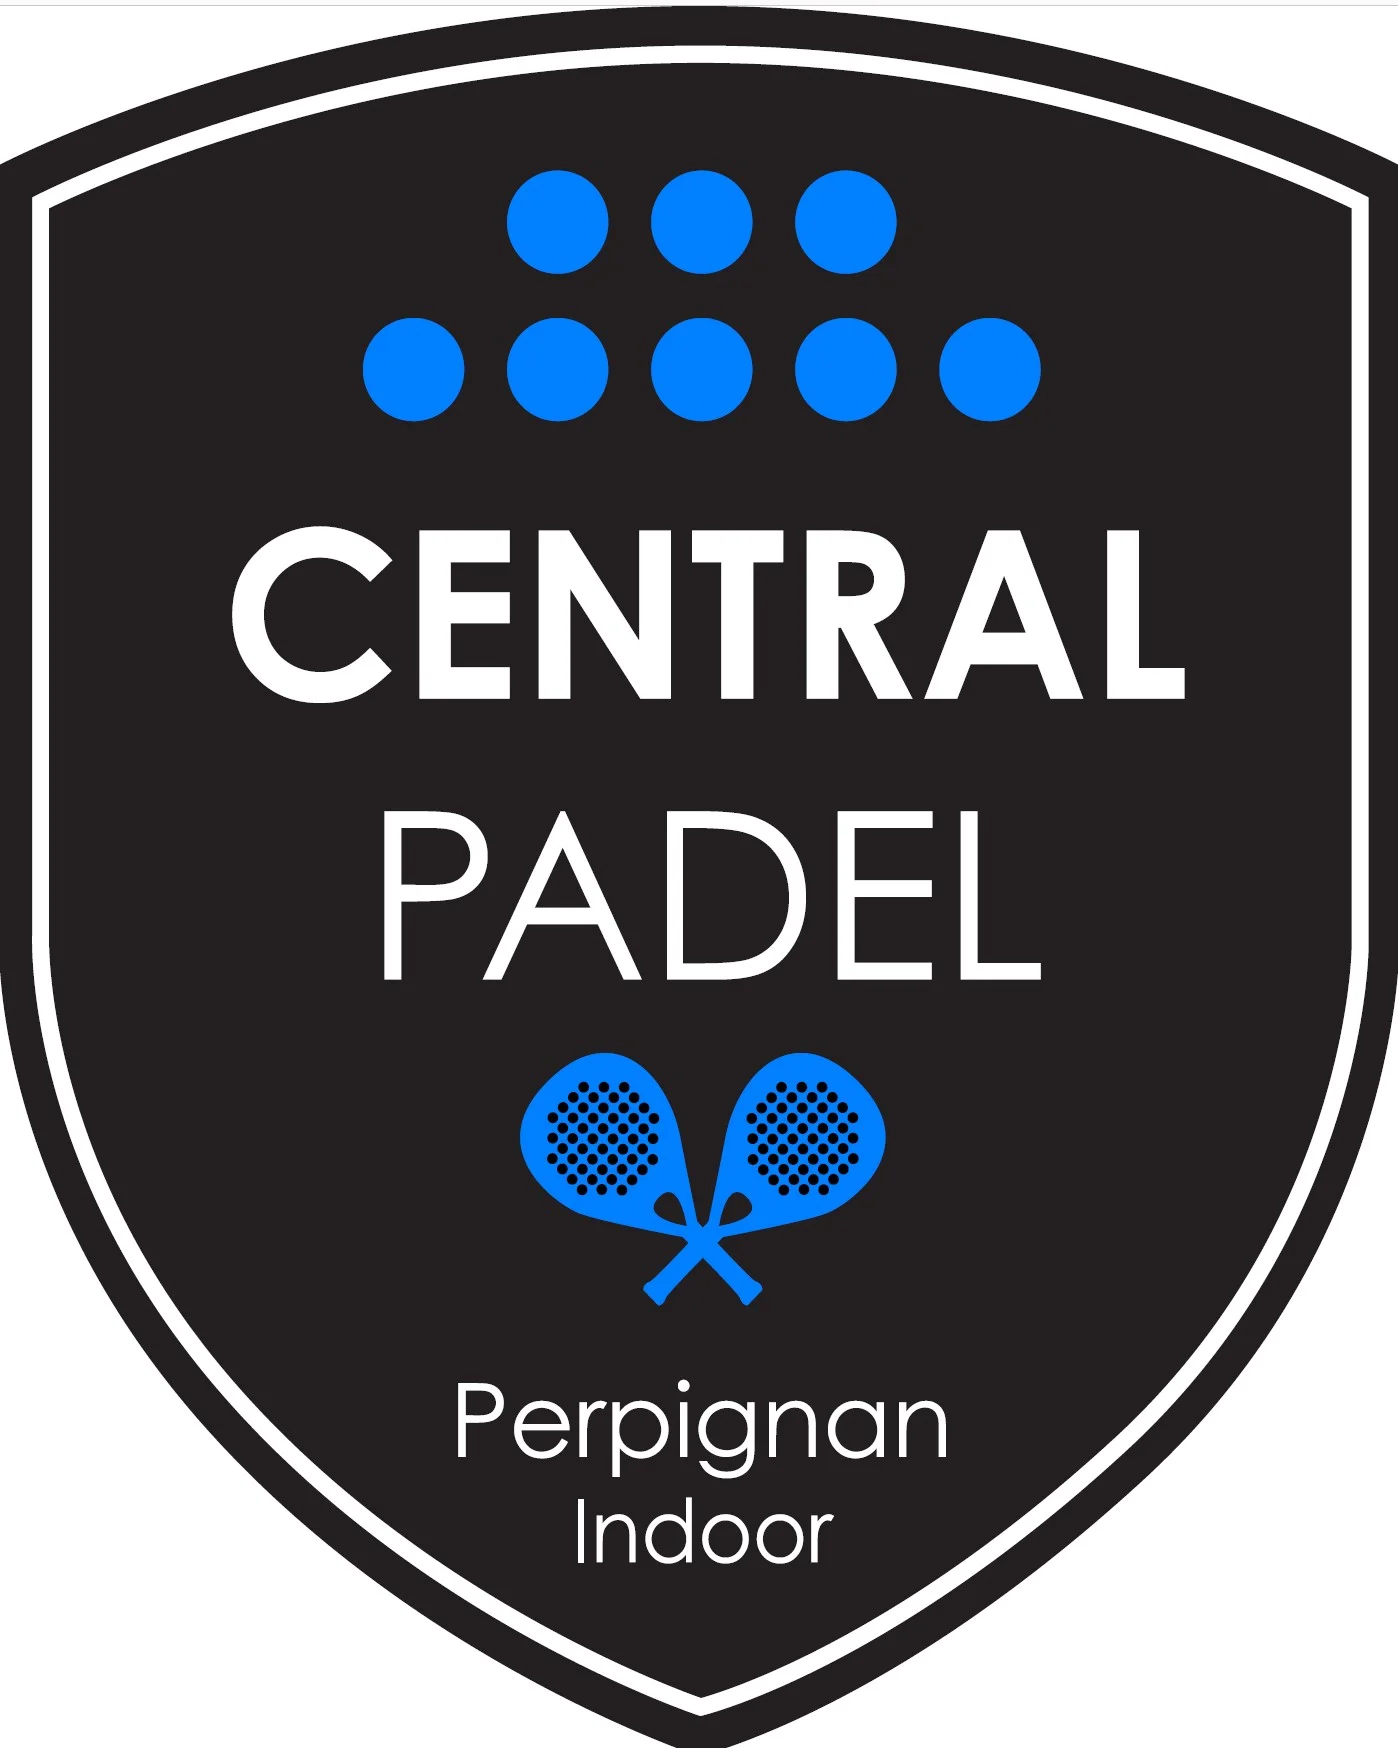 Central logotyp padel perpignan